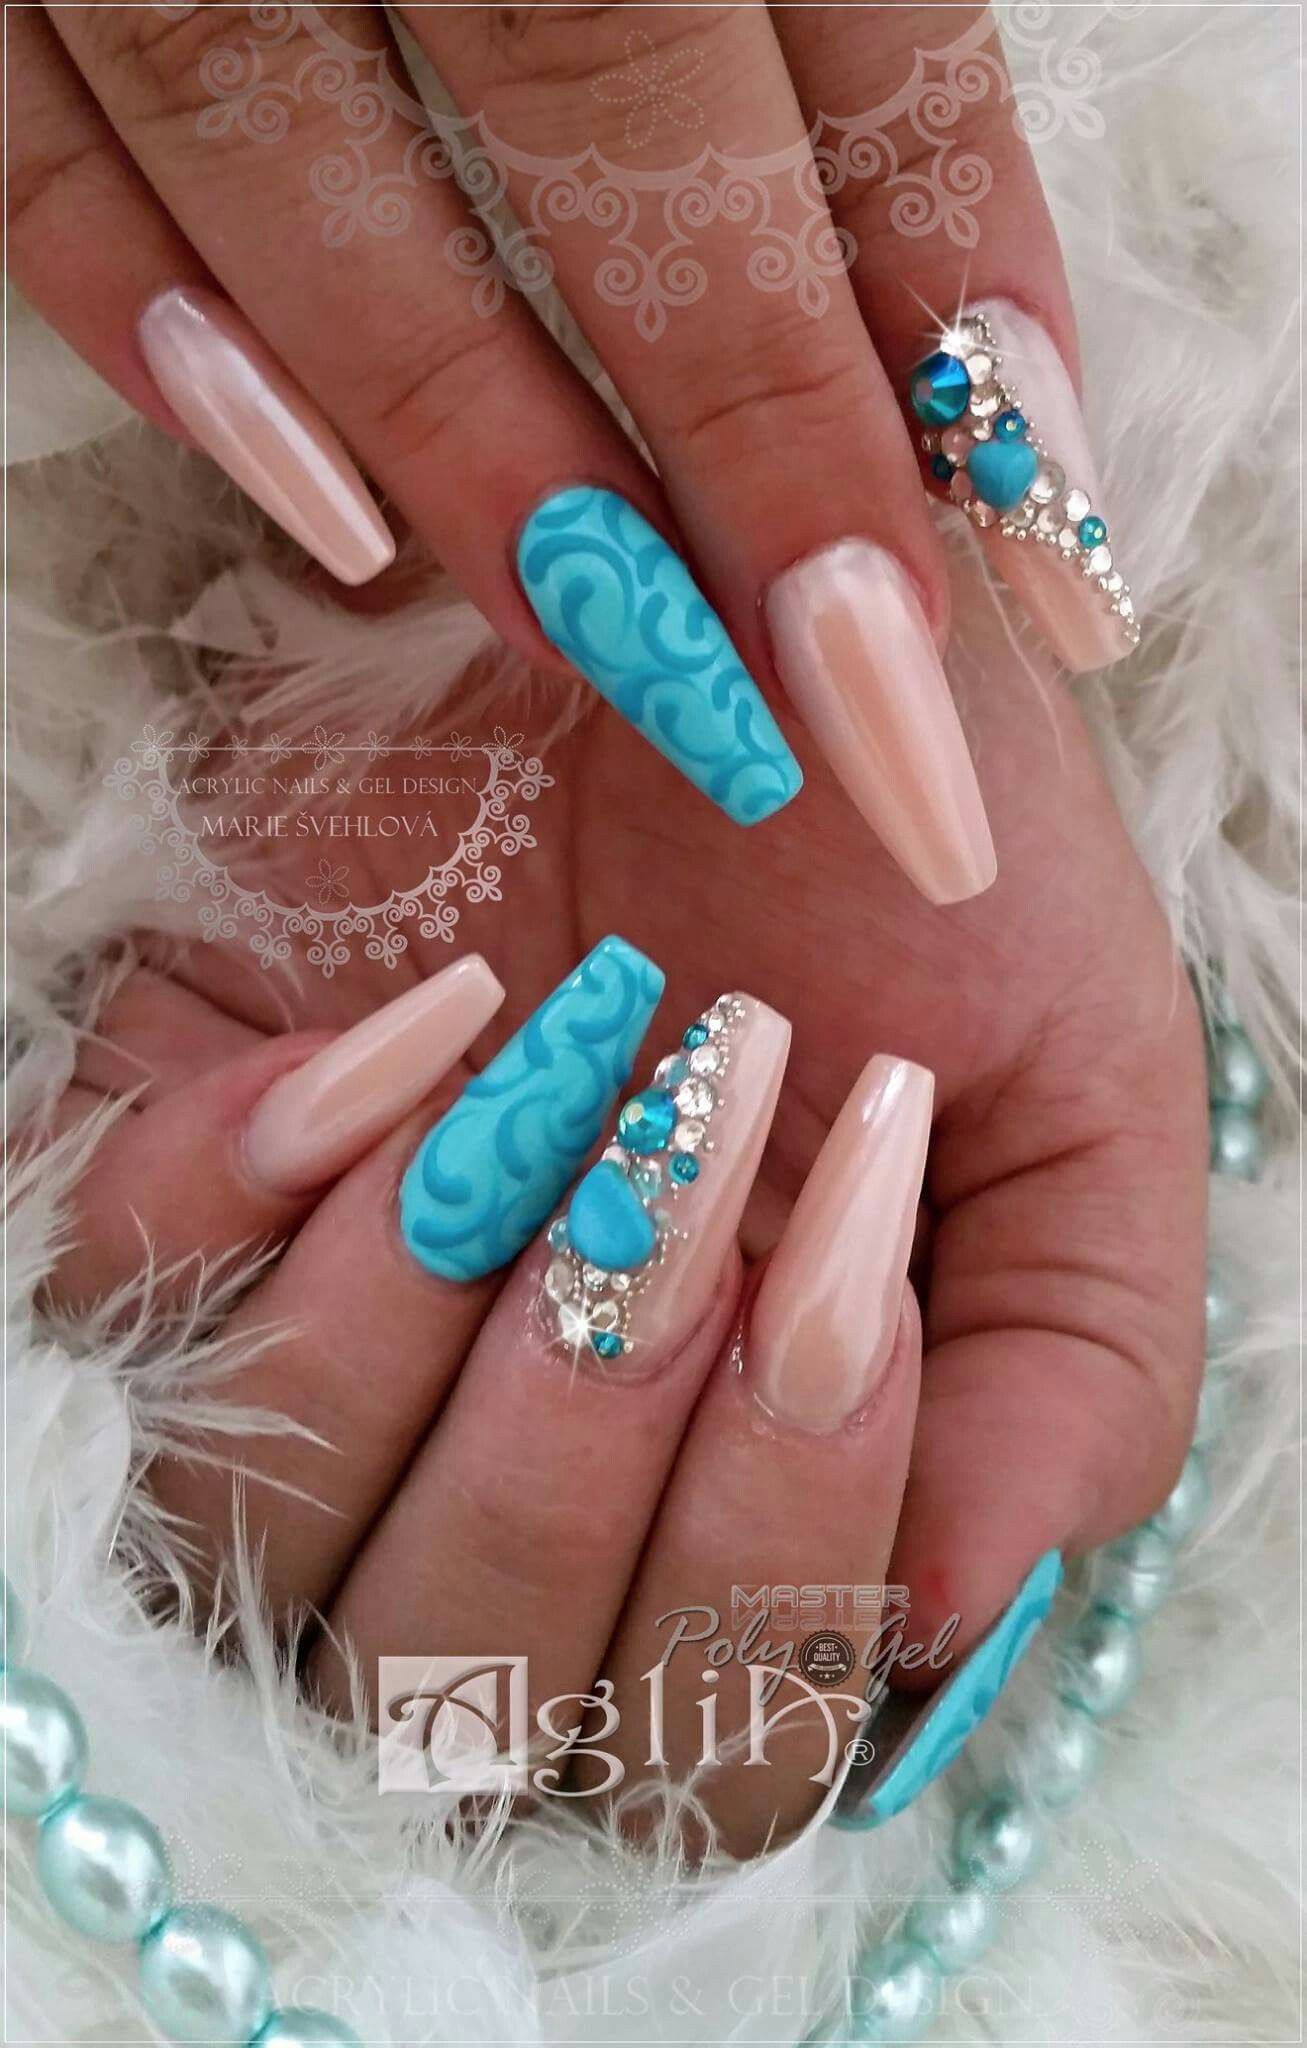 Acrylic Nails Gel Design Nehty